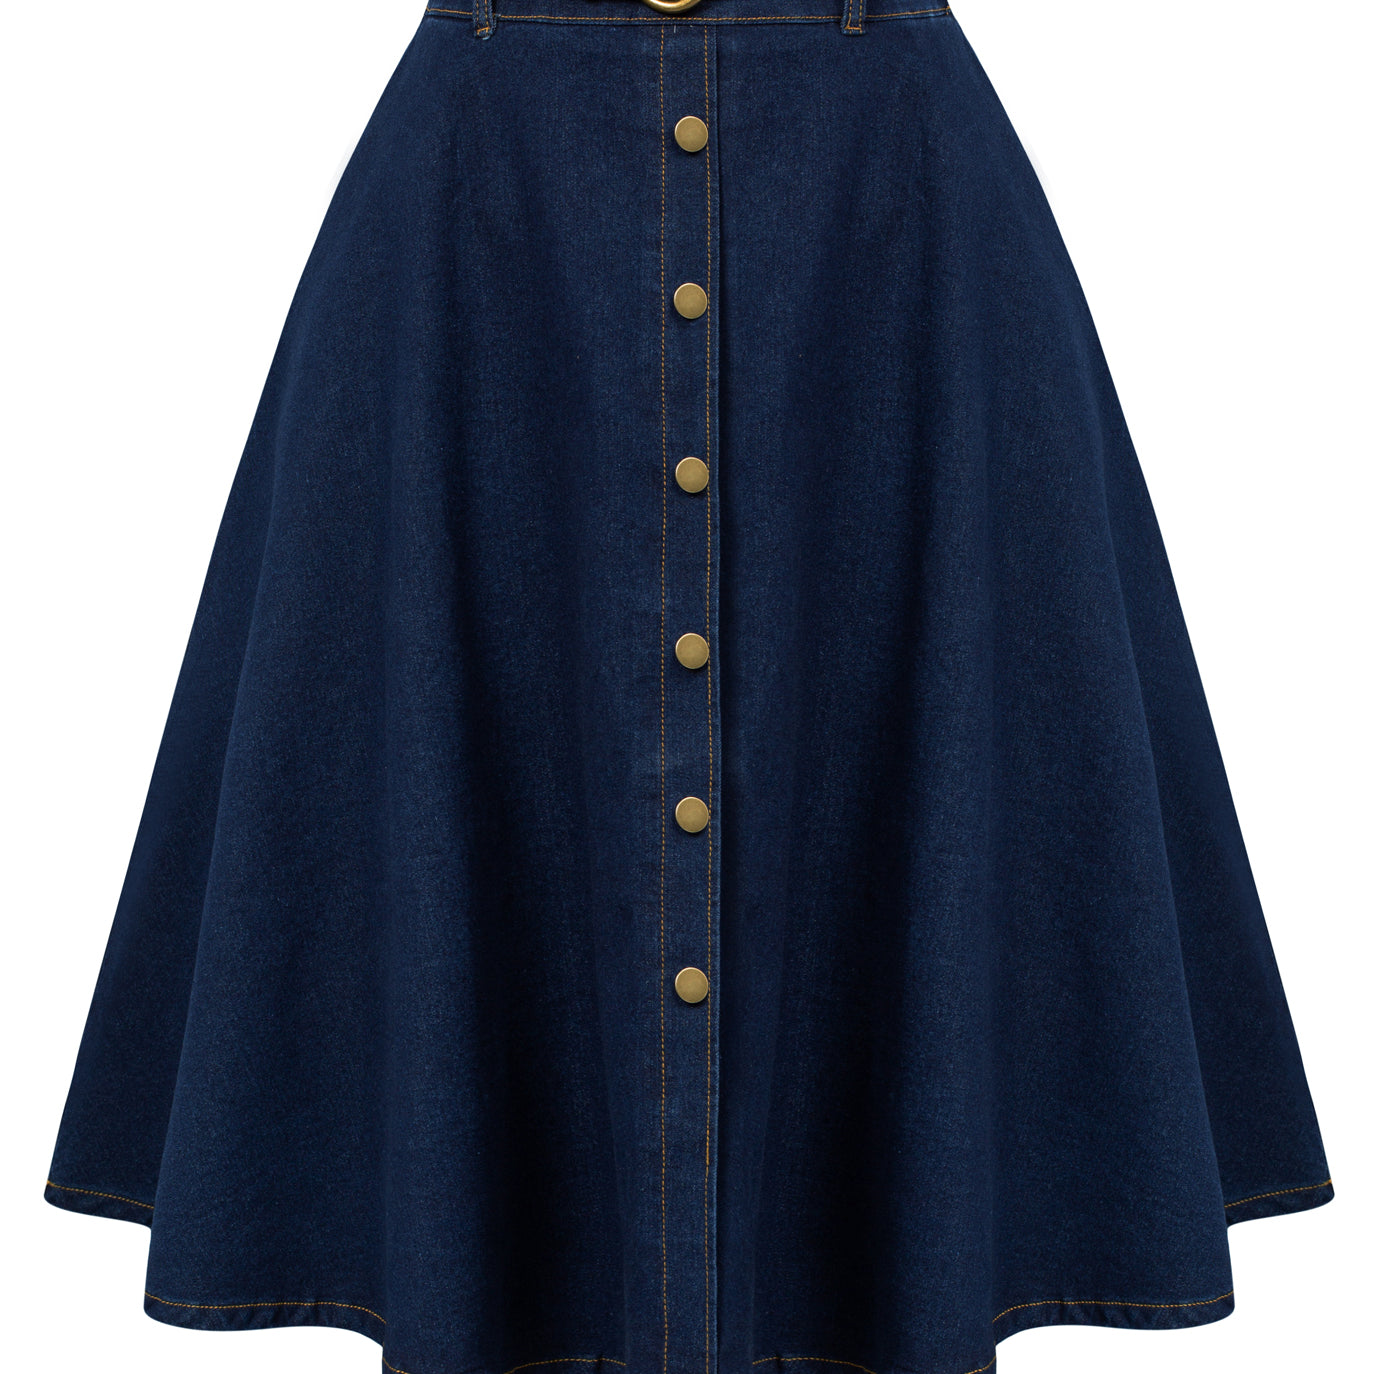 Jean Skirt with Belt Elastic High Waist A-Line Midi Skirt